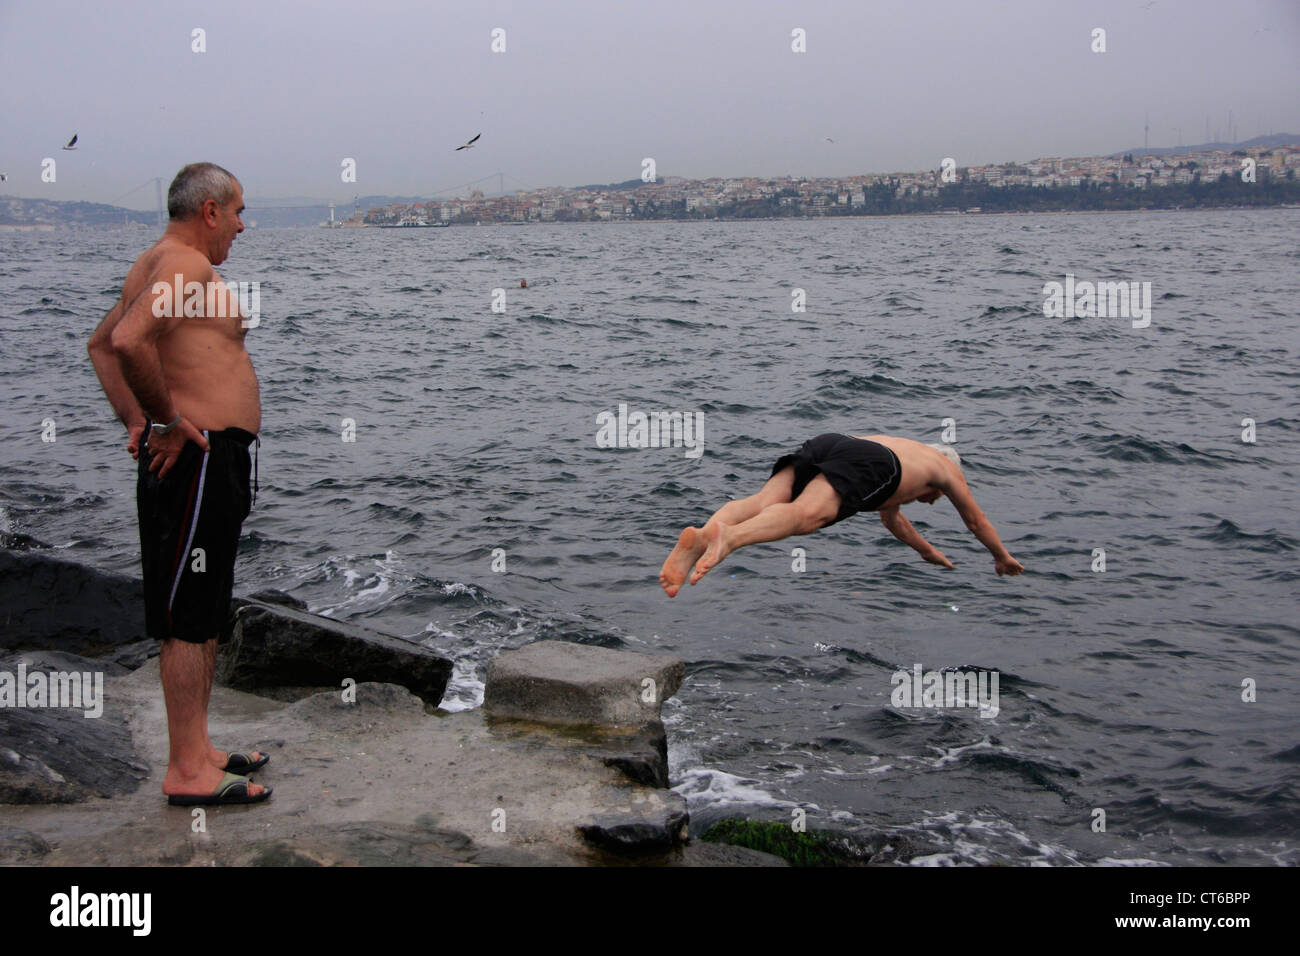 Turkish man diving into Bosphorus strait, Istanbul, Turkey Stock Photo